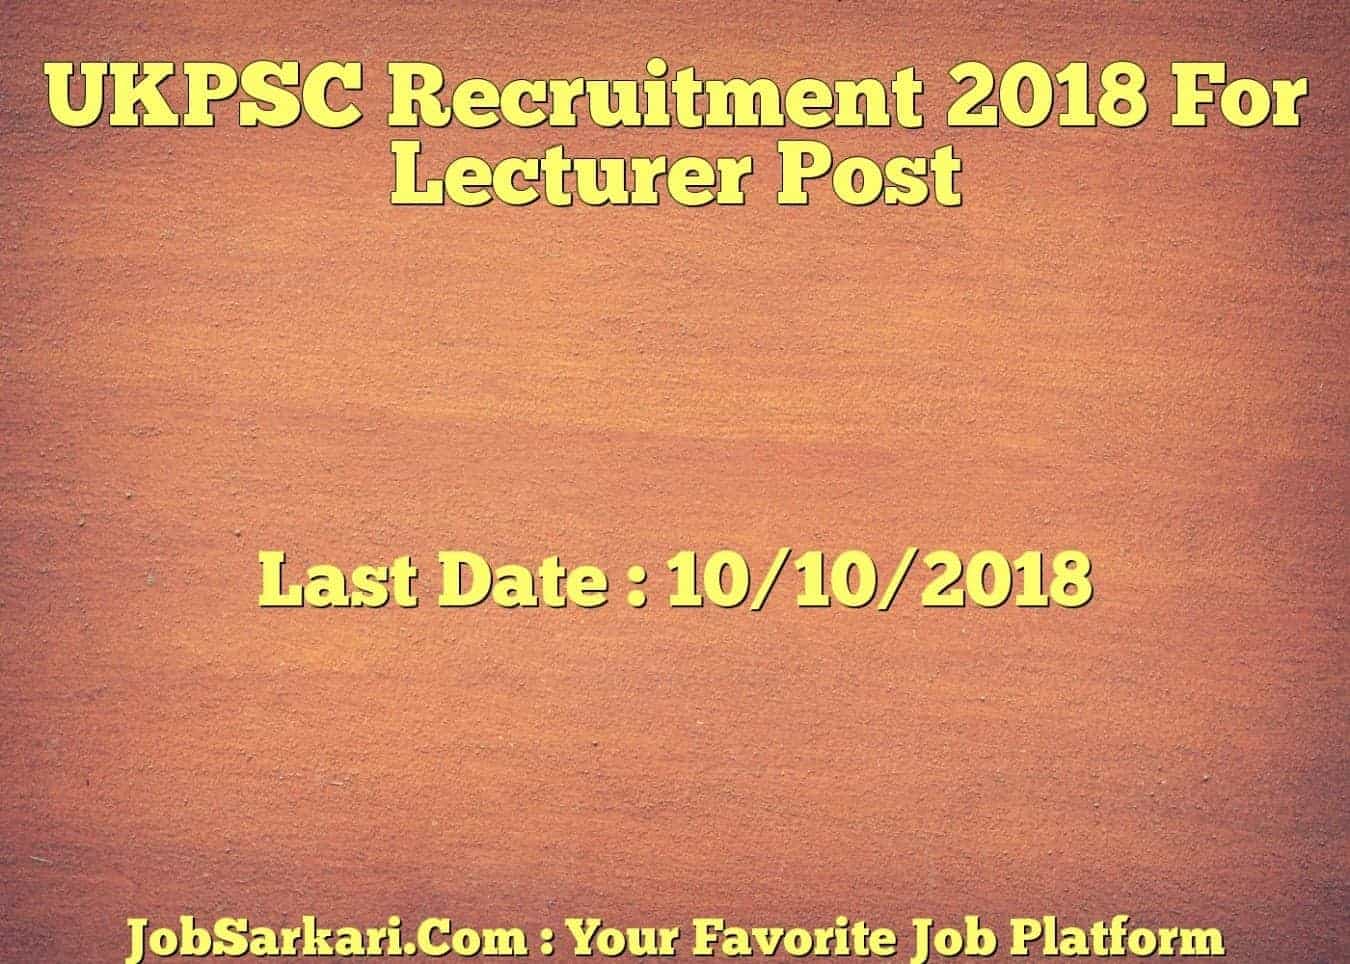 UKPSC Recruitment 2018 For Lecturer Post